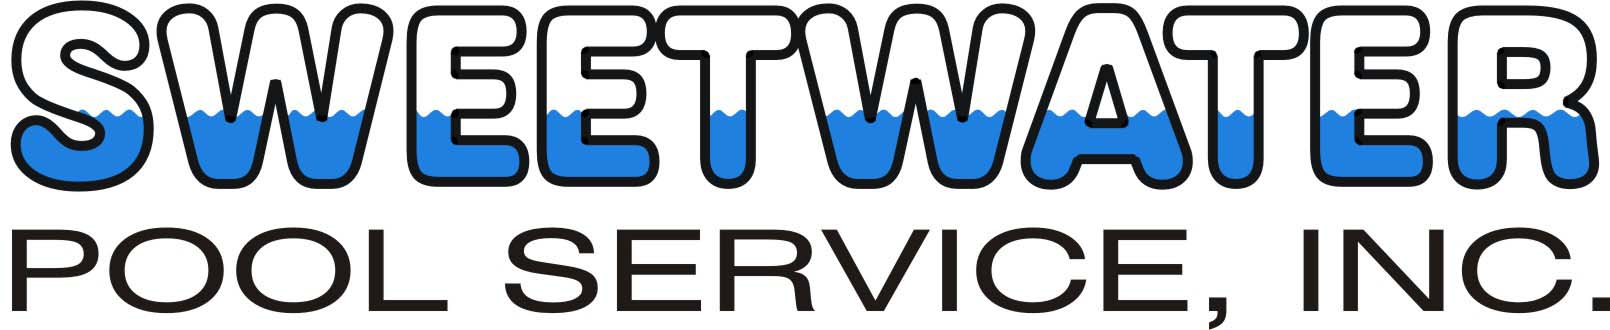 Sweetwater Pool Service, Inc. Logo